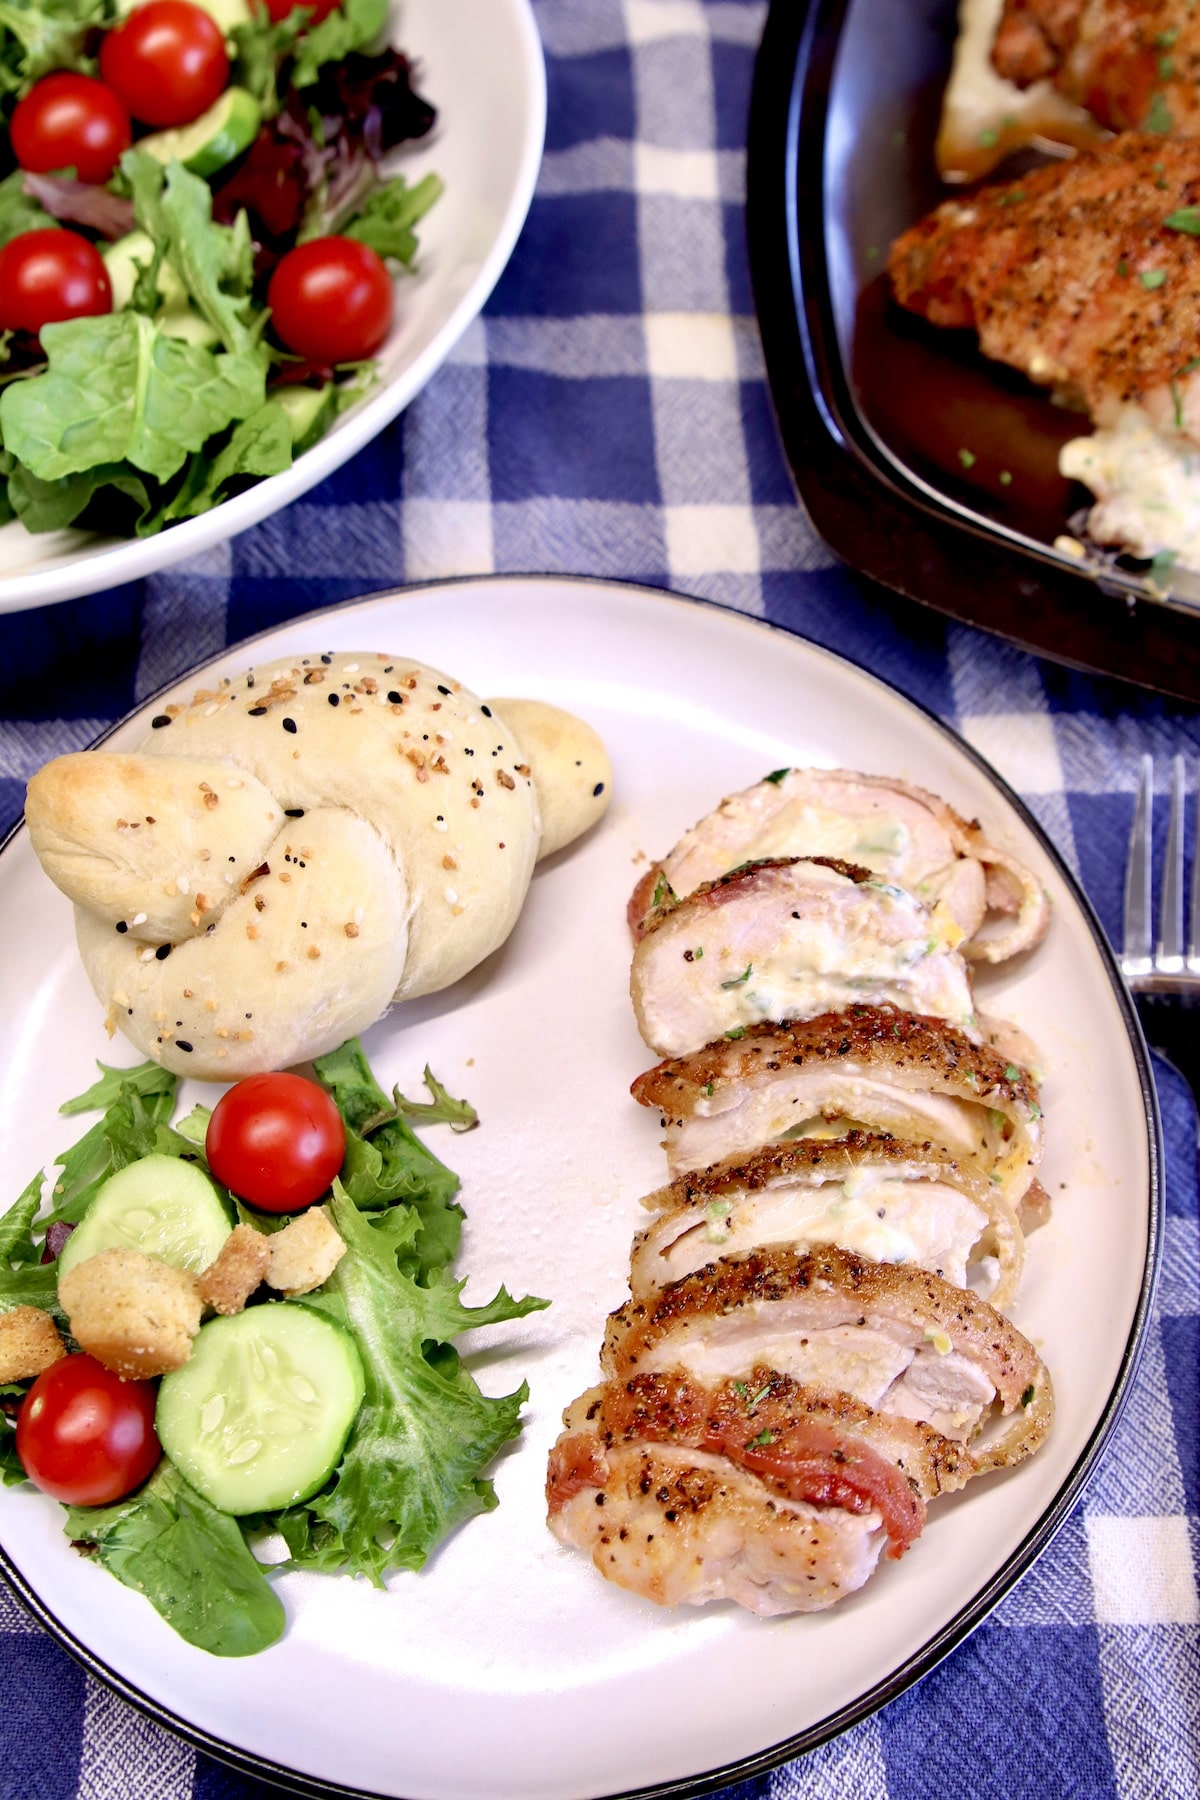 Plate of sliced pork chop, salad, bread.